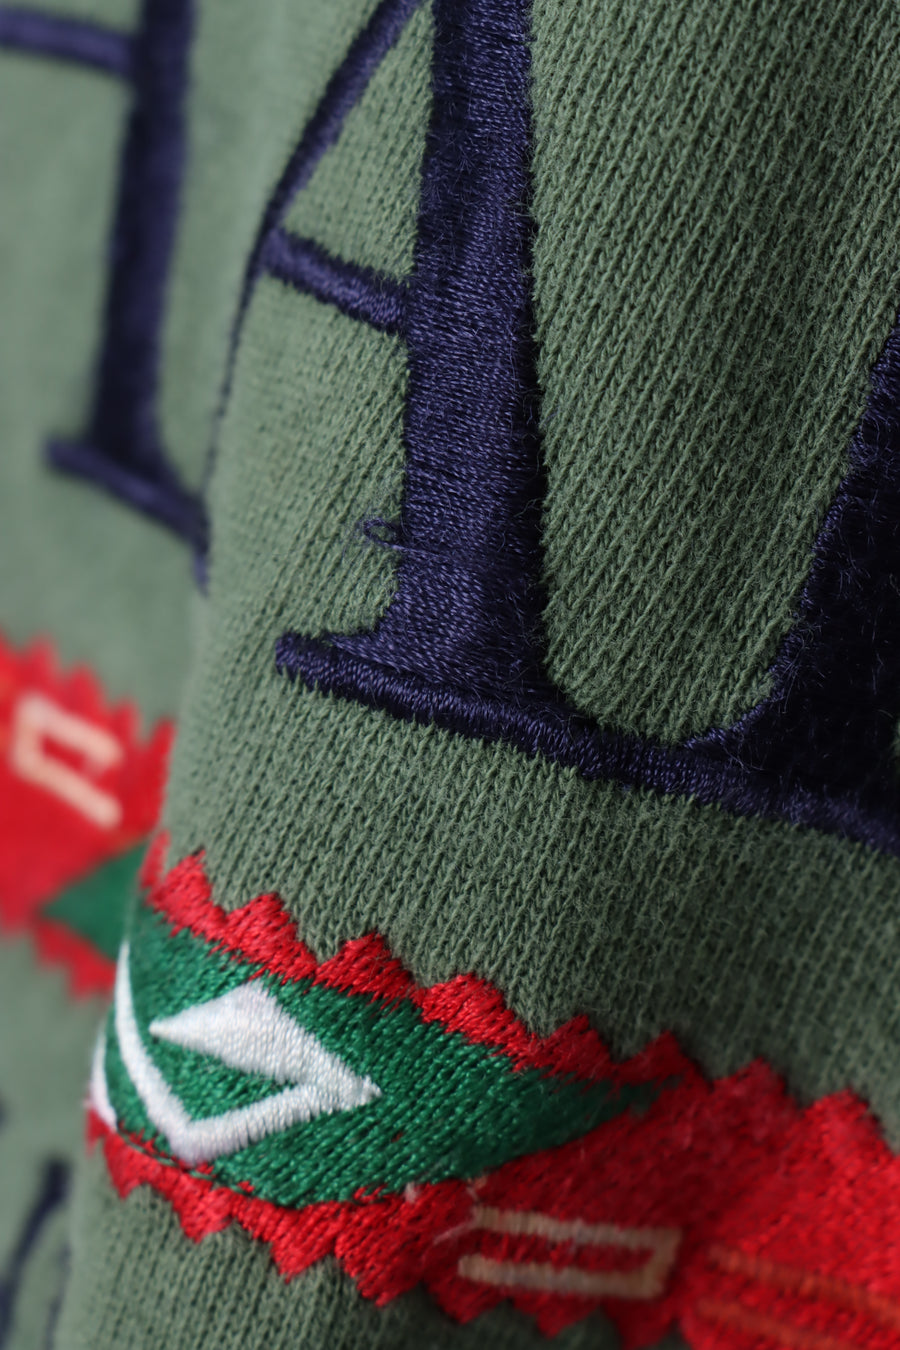 CHAPS RALPH LAUREN Green Embroidered Sweatshirt (XXL)